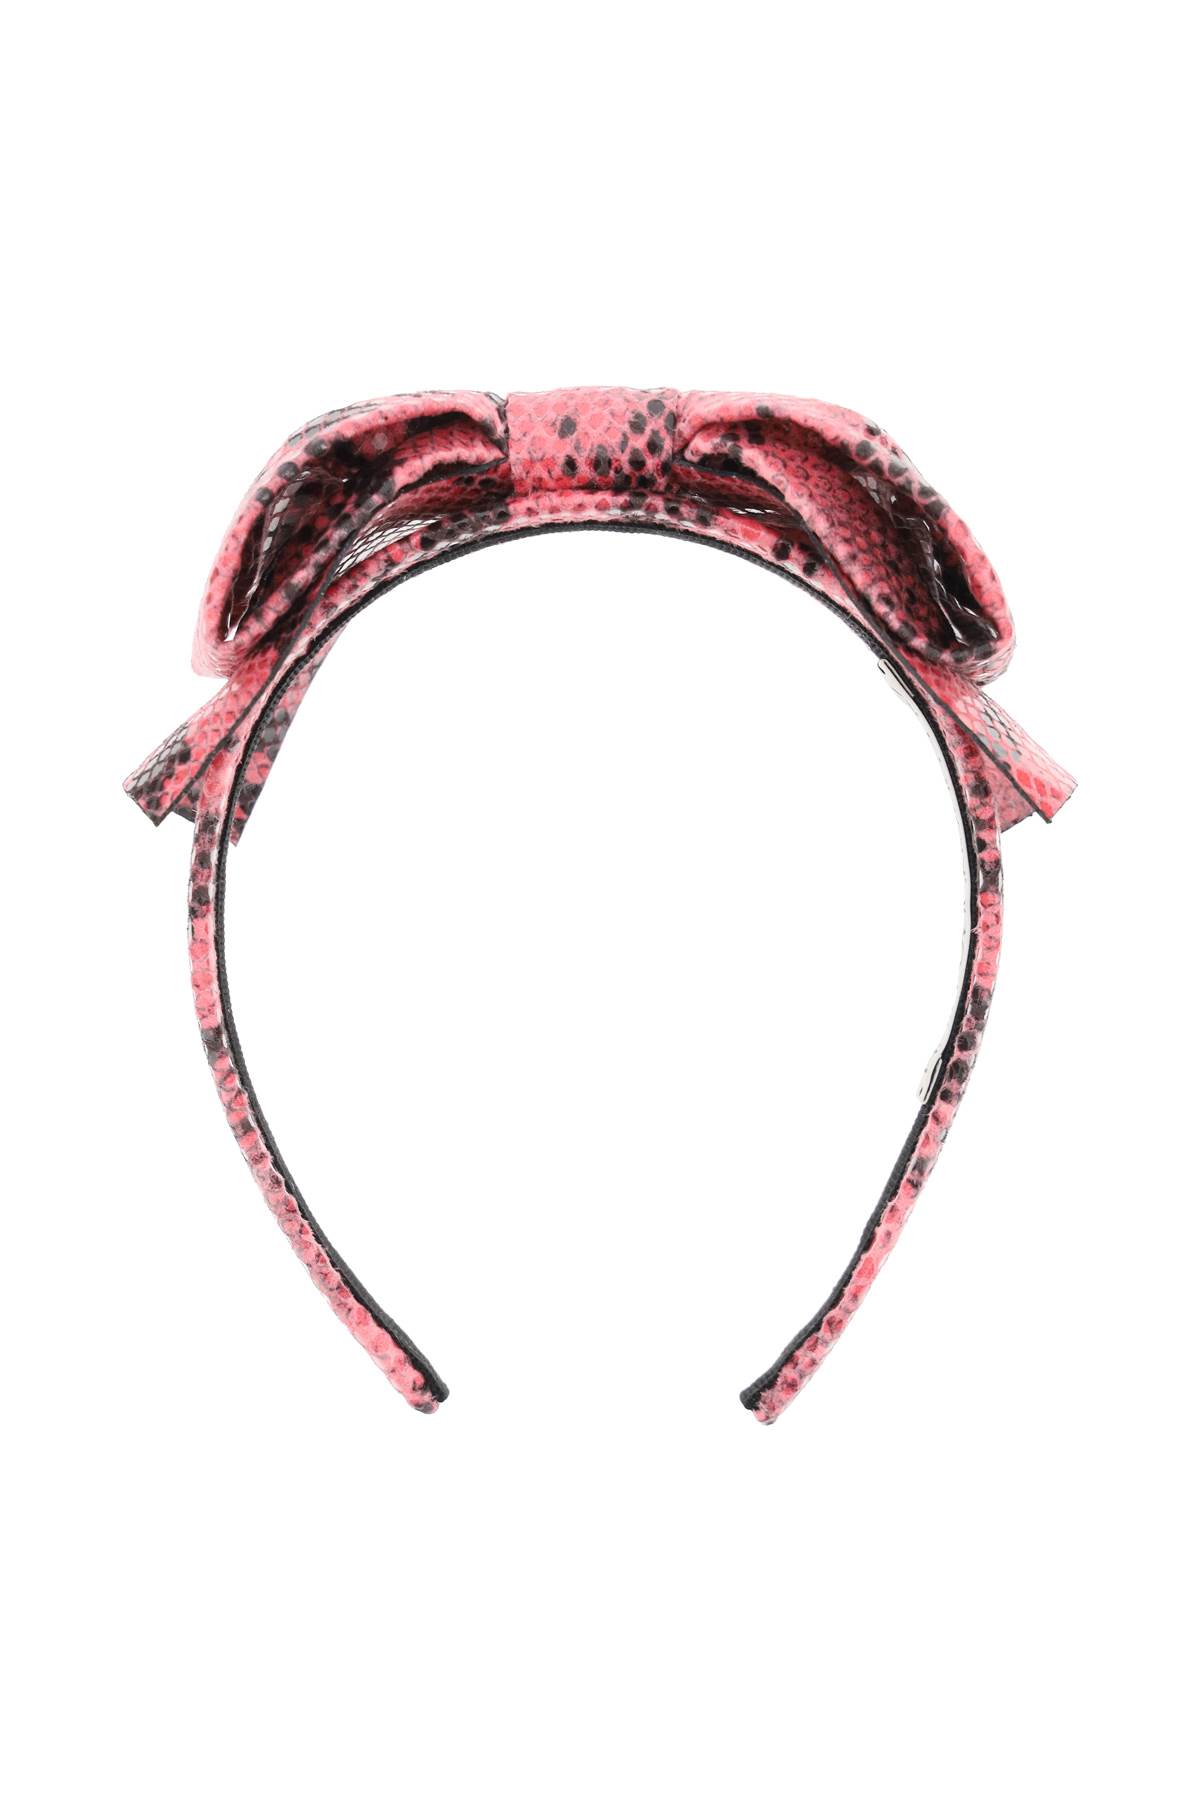 Alessandra Rich Python Print Headband With Bow